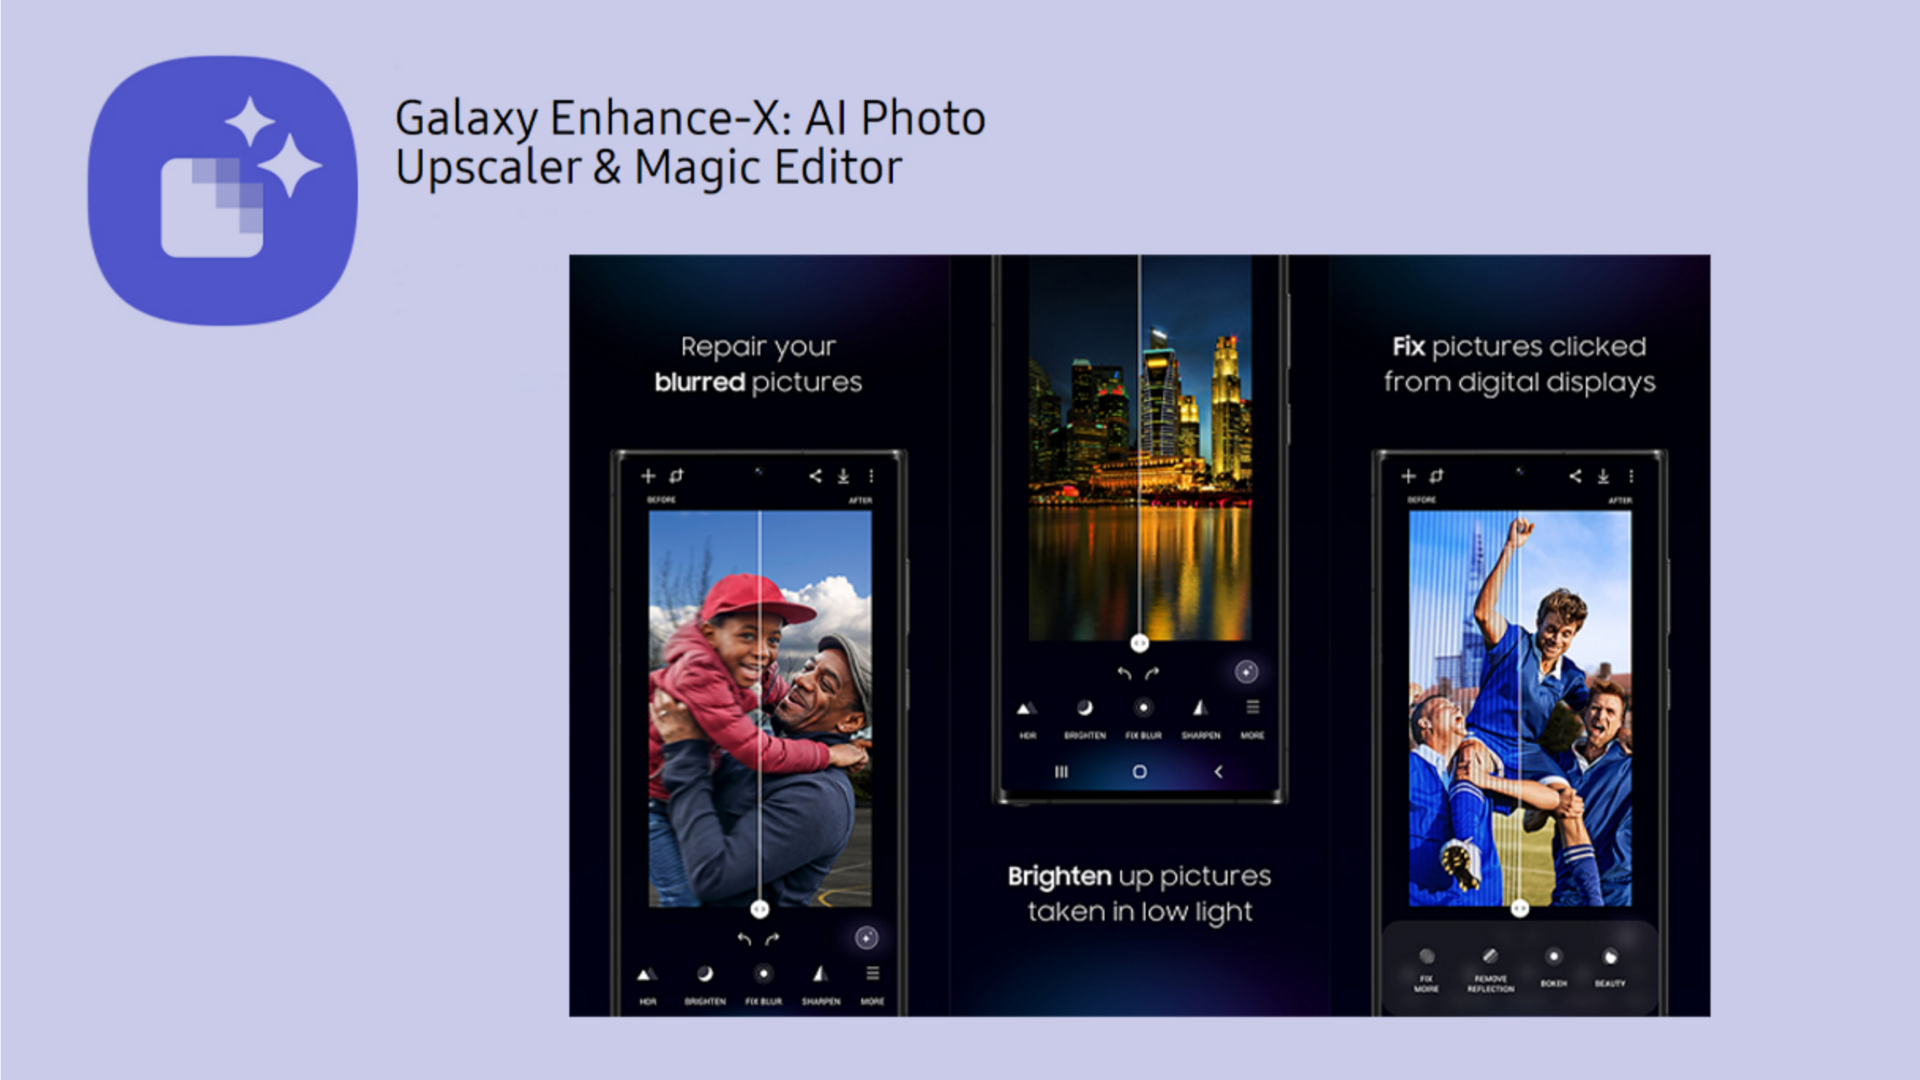 Samsung's Galaxy Enhance-X AI app: How does it work